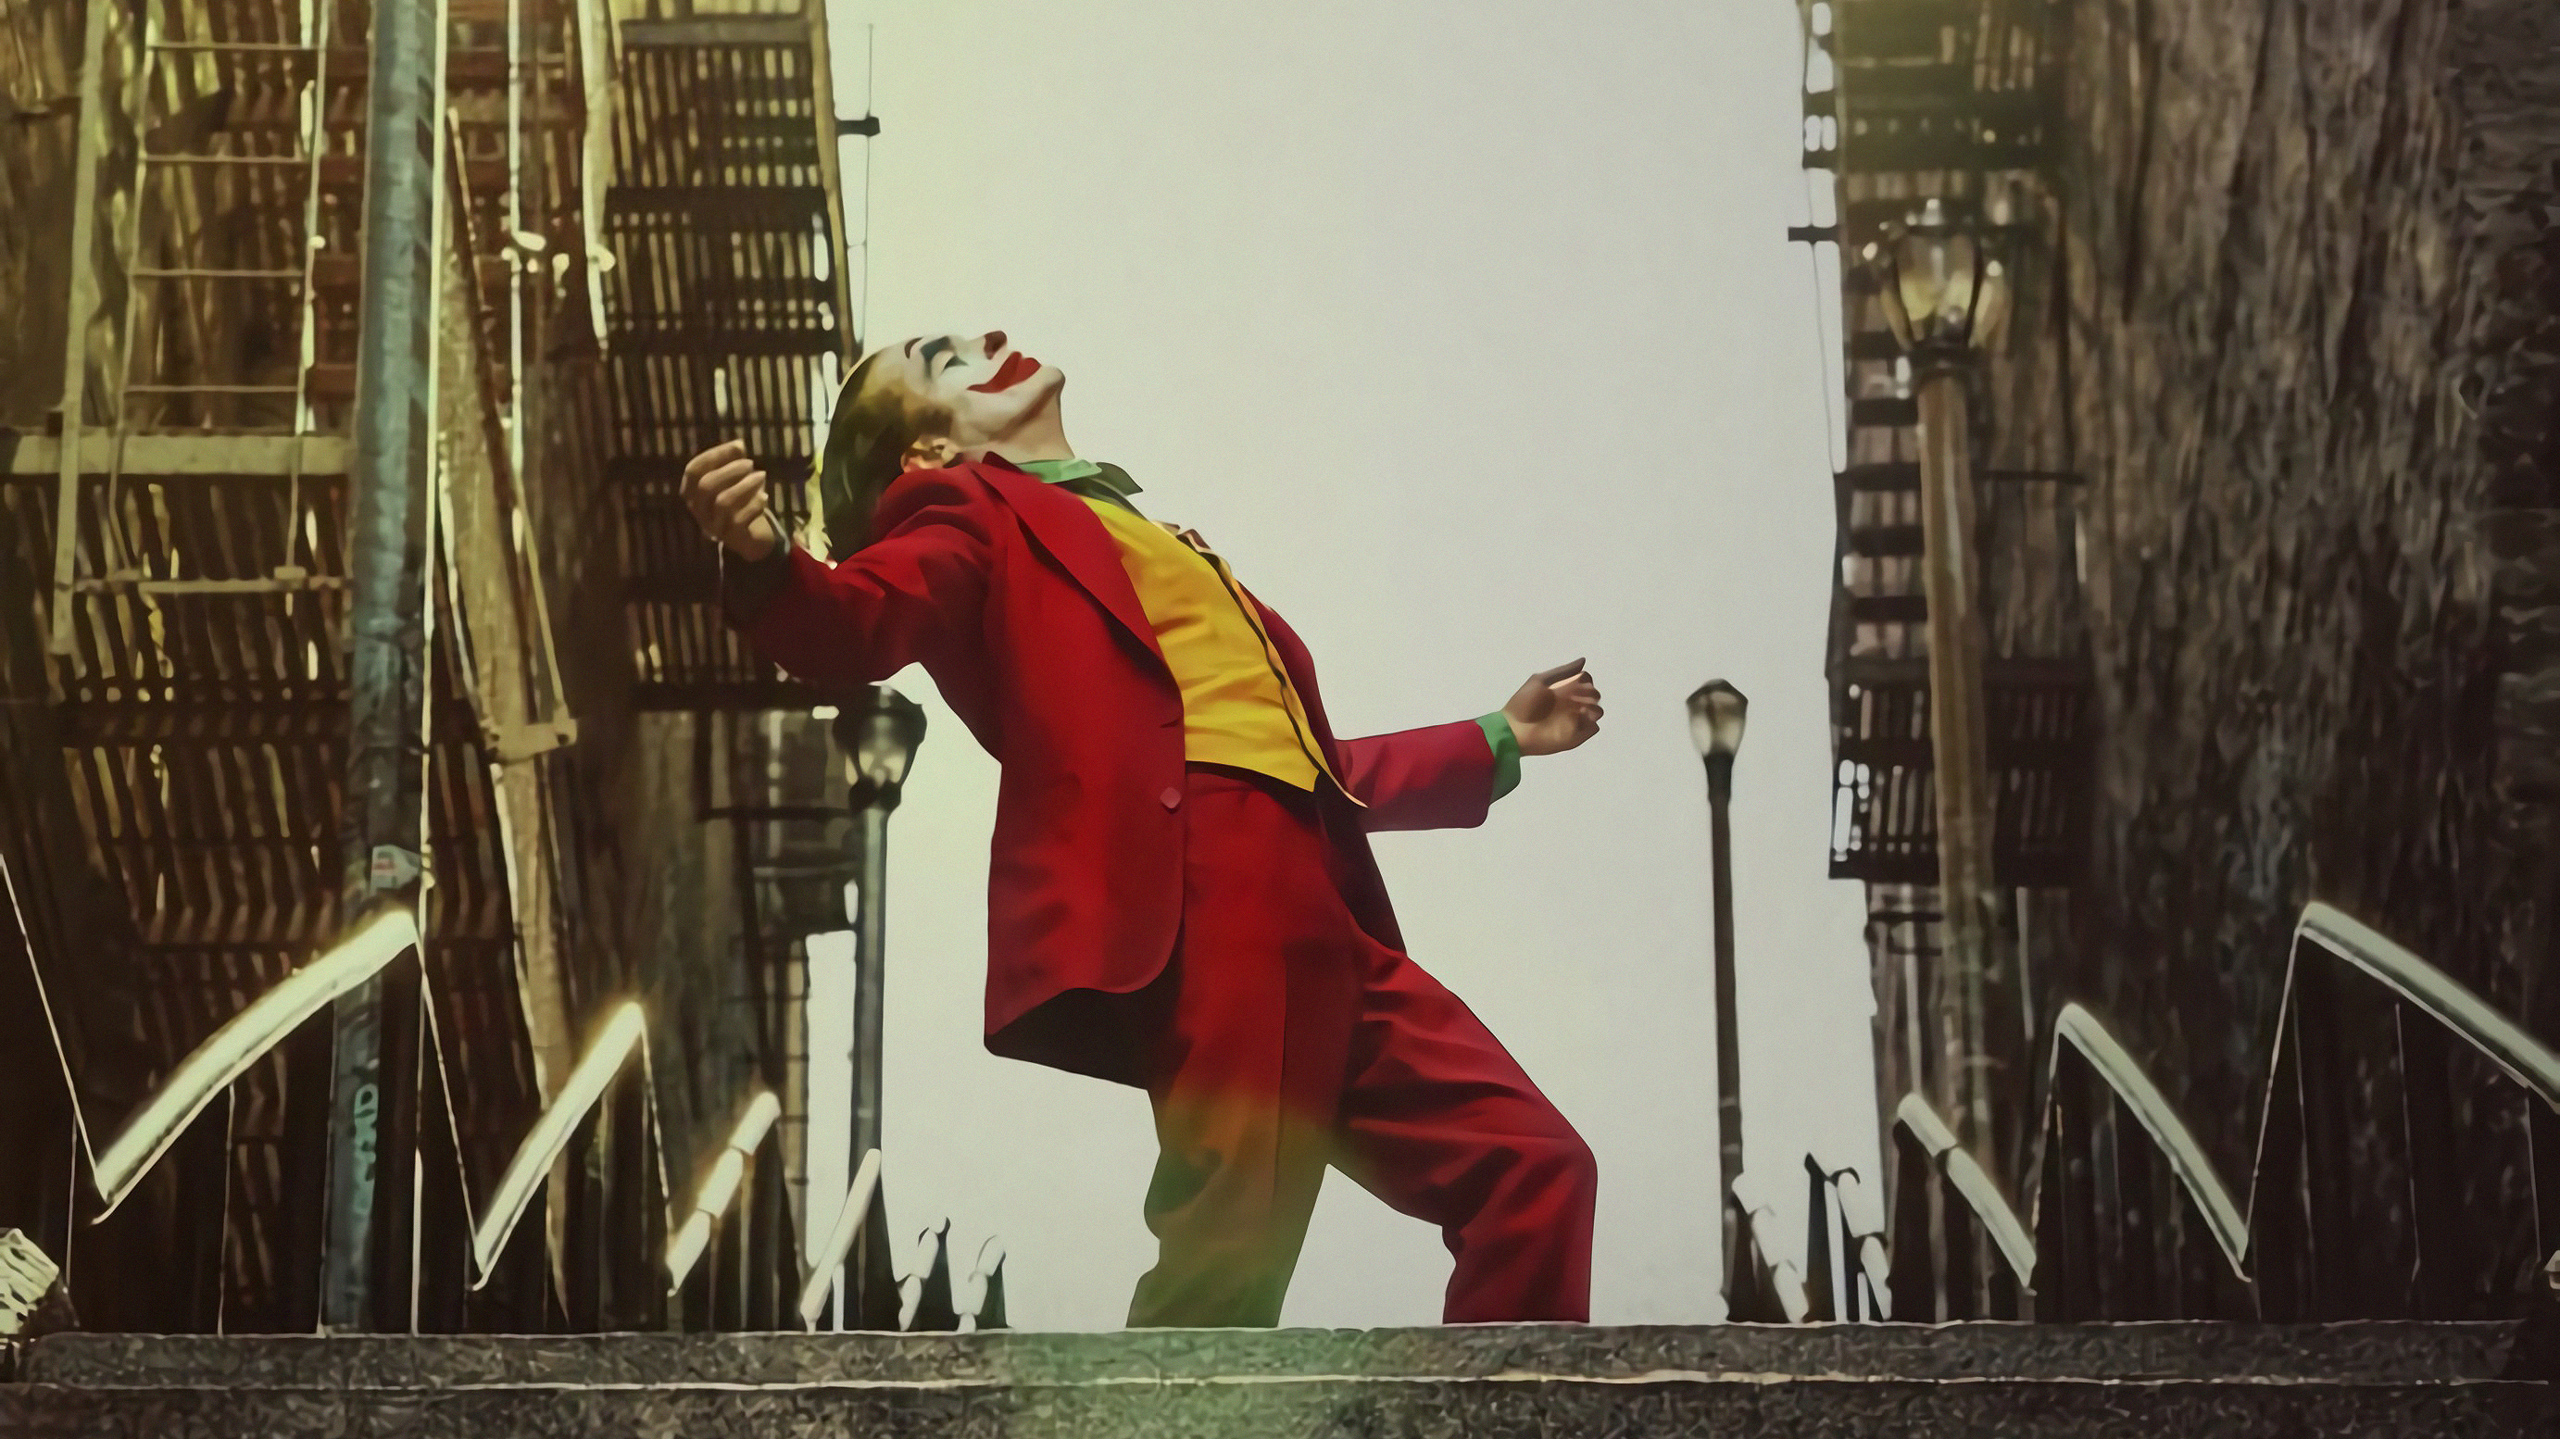 Joker With Bloody Wings Wallpapers